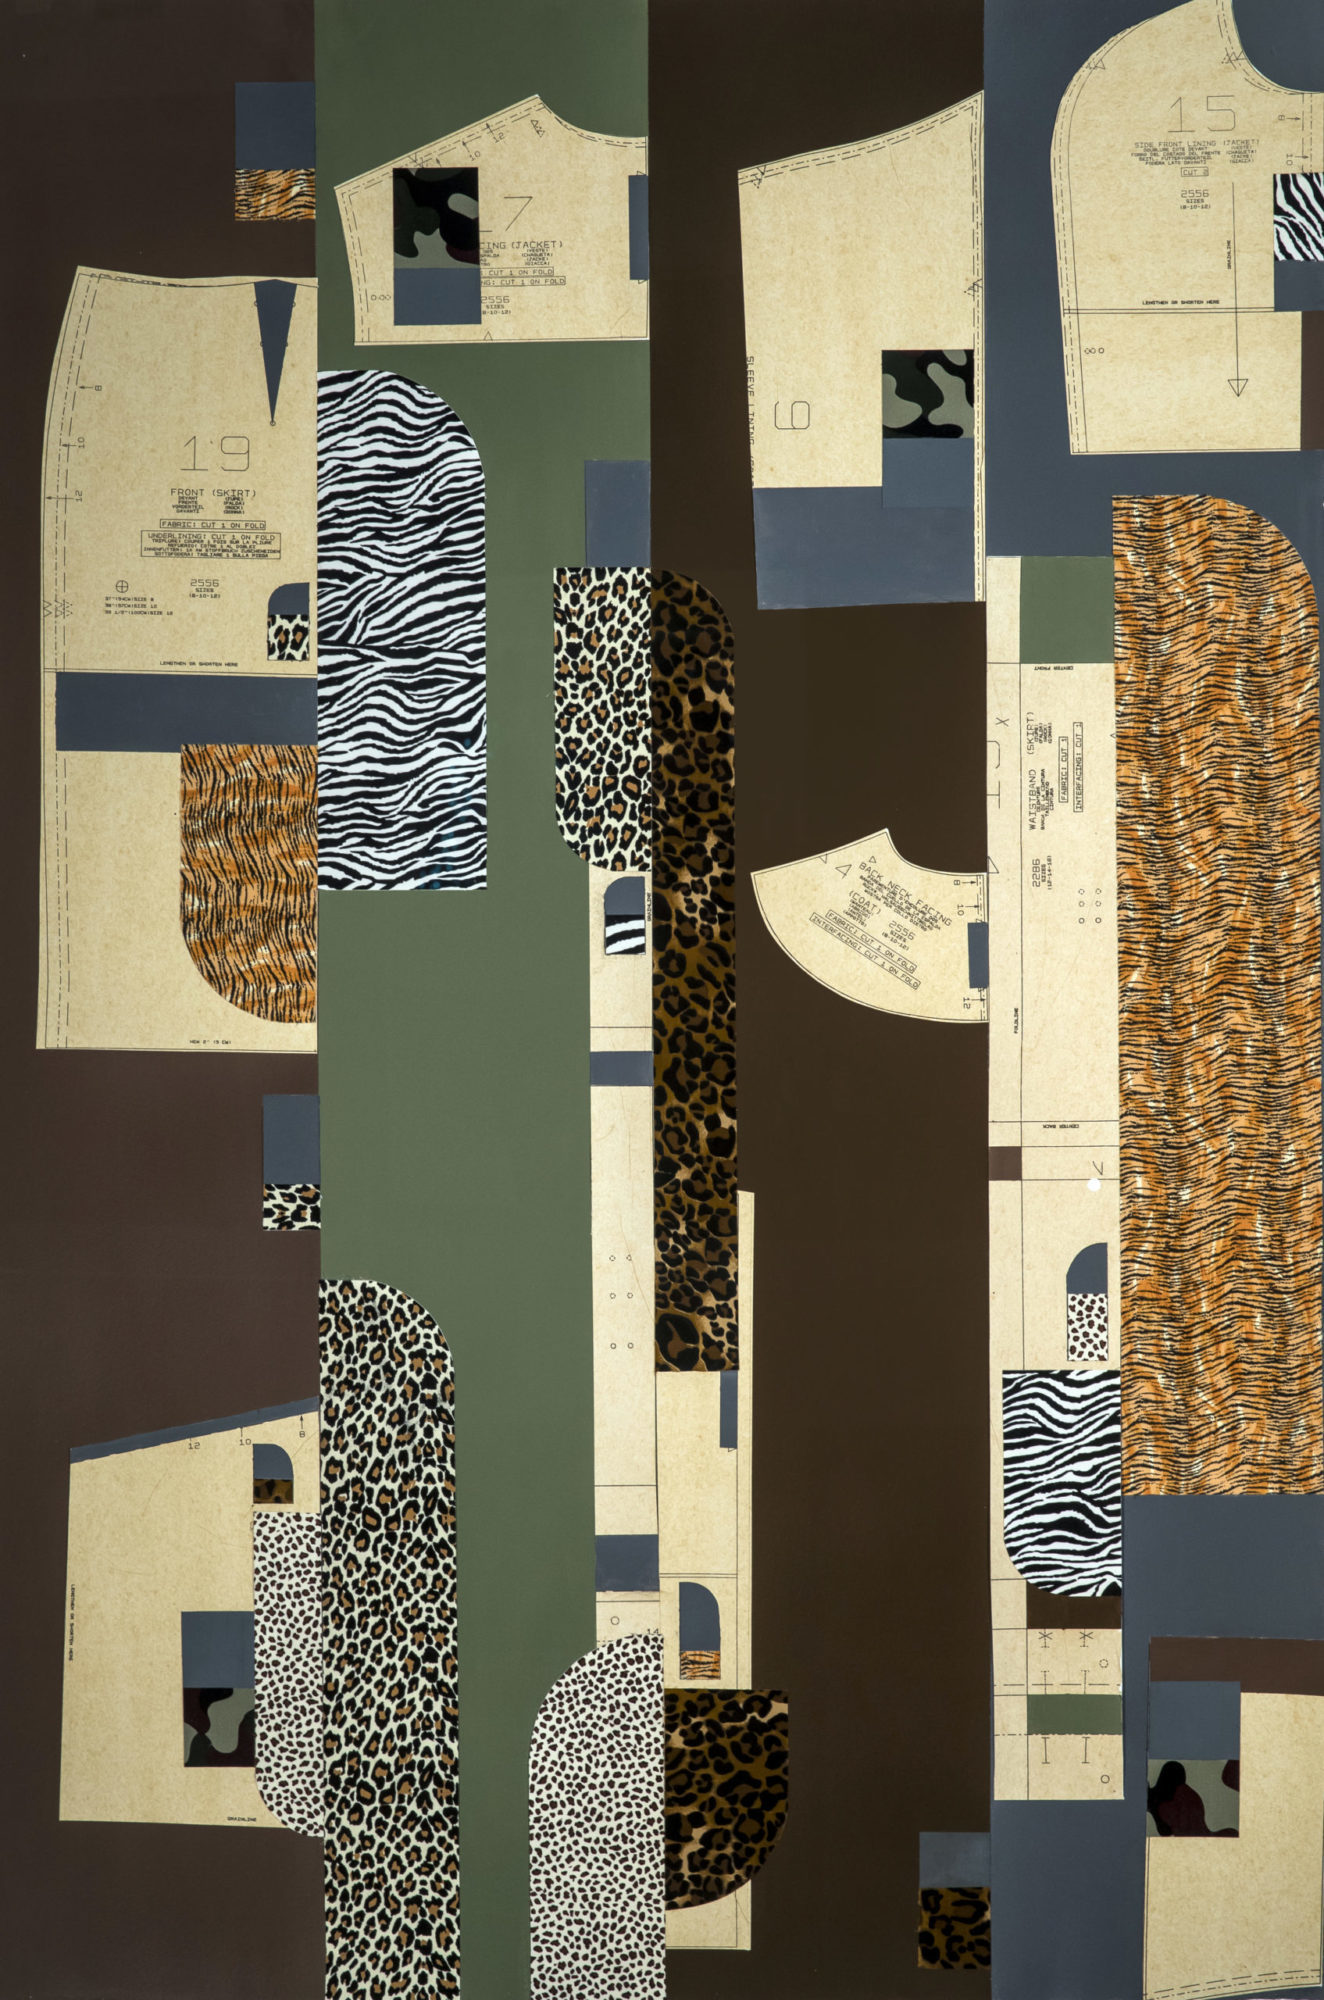 Multi-pattern work by Derrick Adams in natural tones and animal print